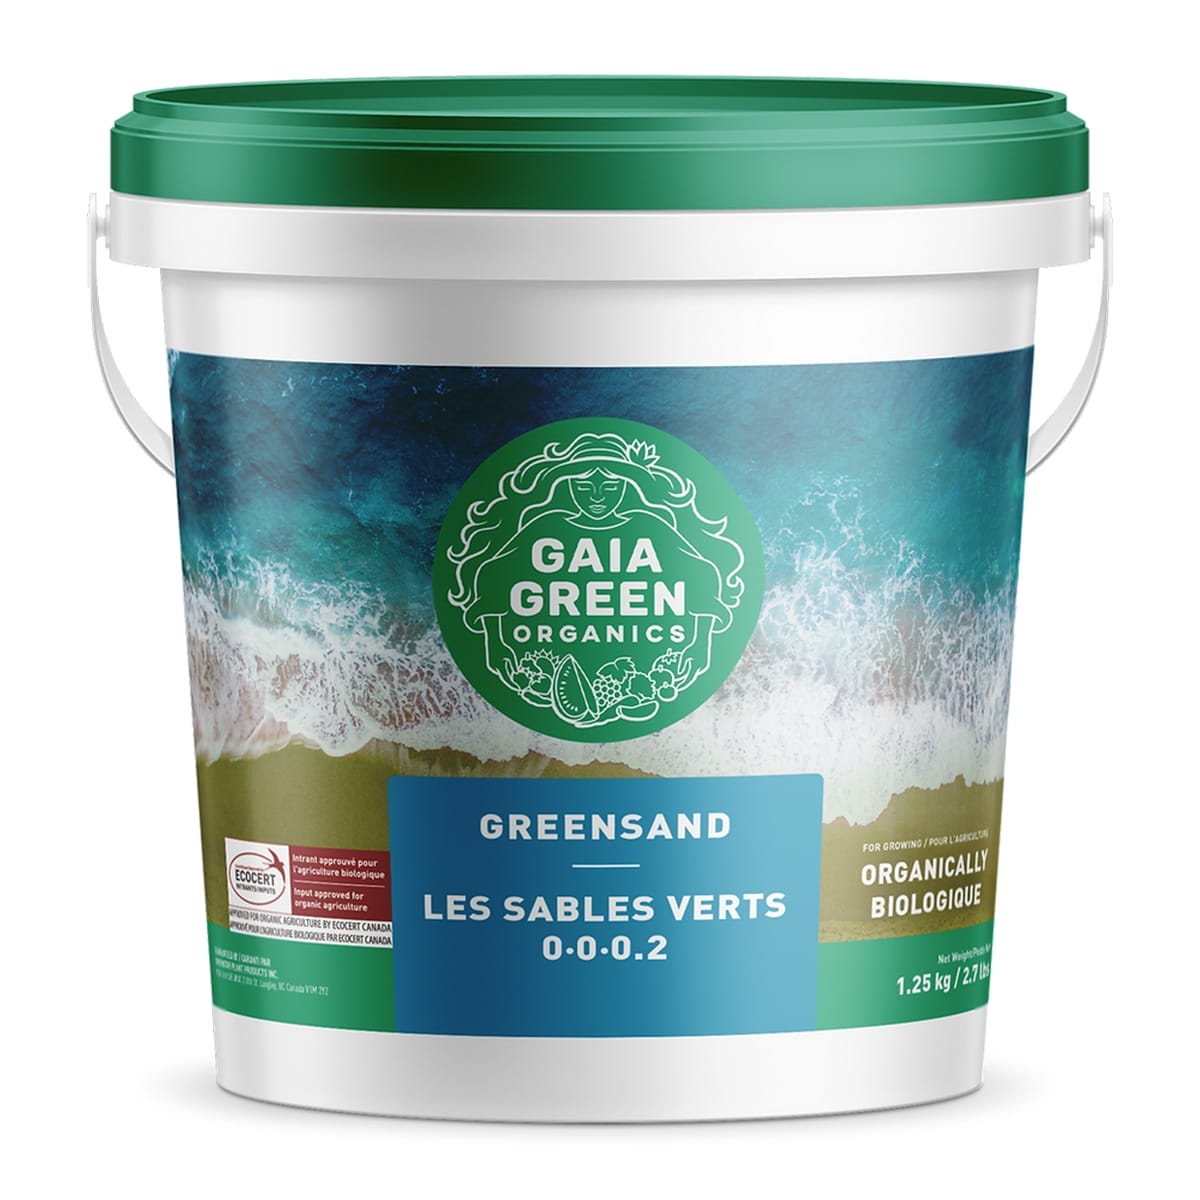 Gaia Green Organics Greensand 1.5kg